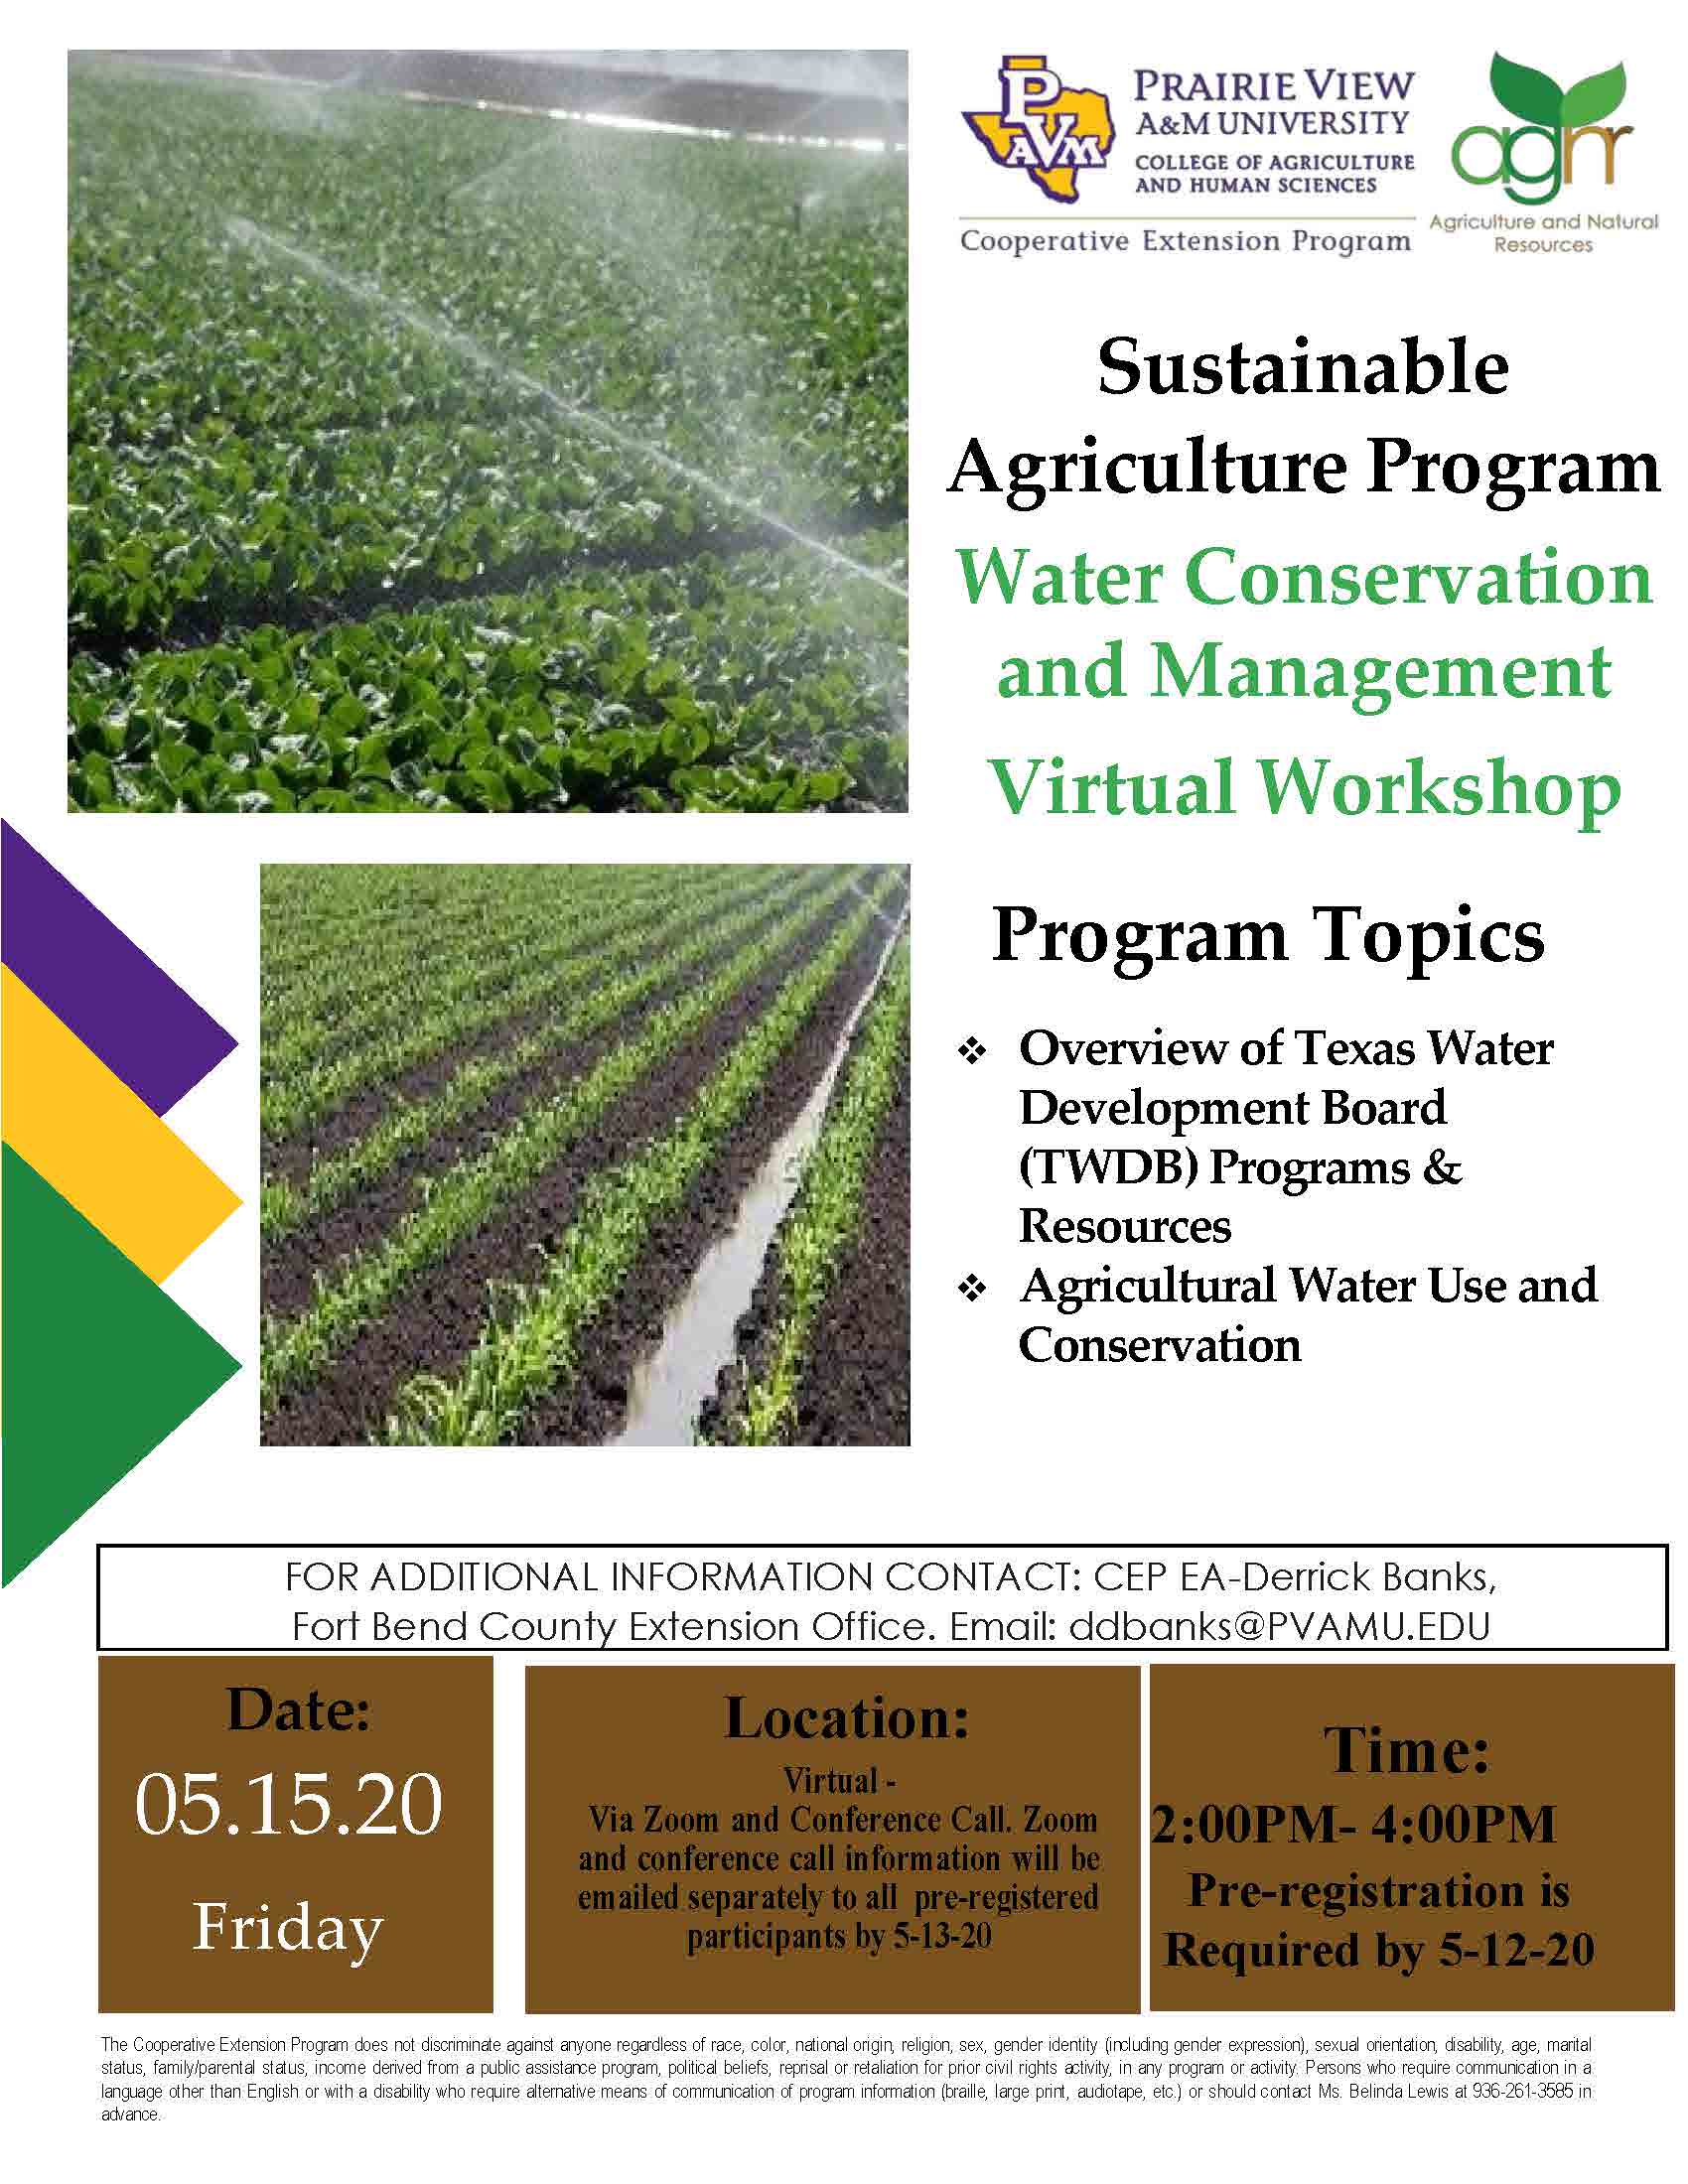 Water Conservation and Management workshop